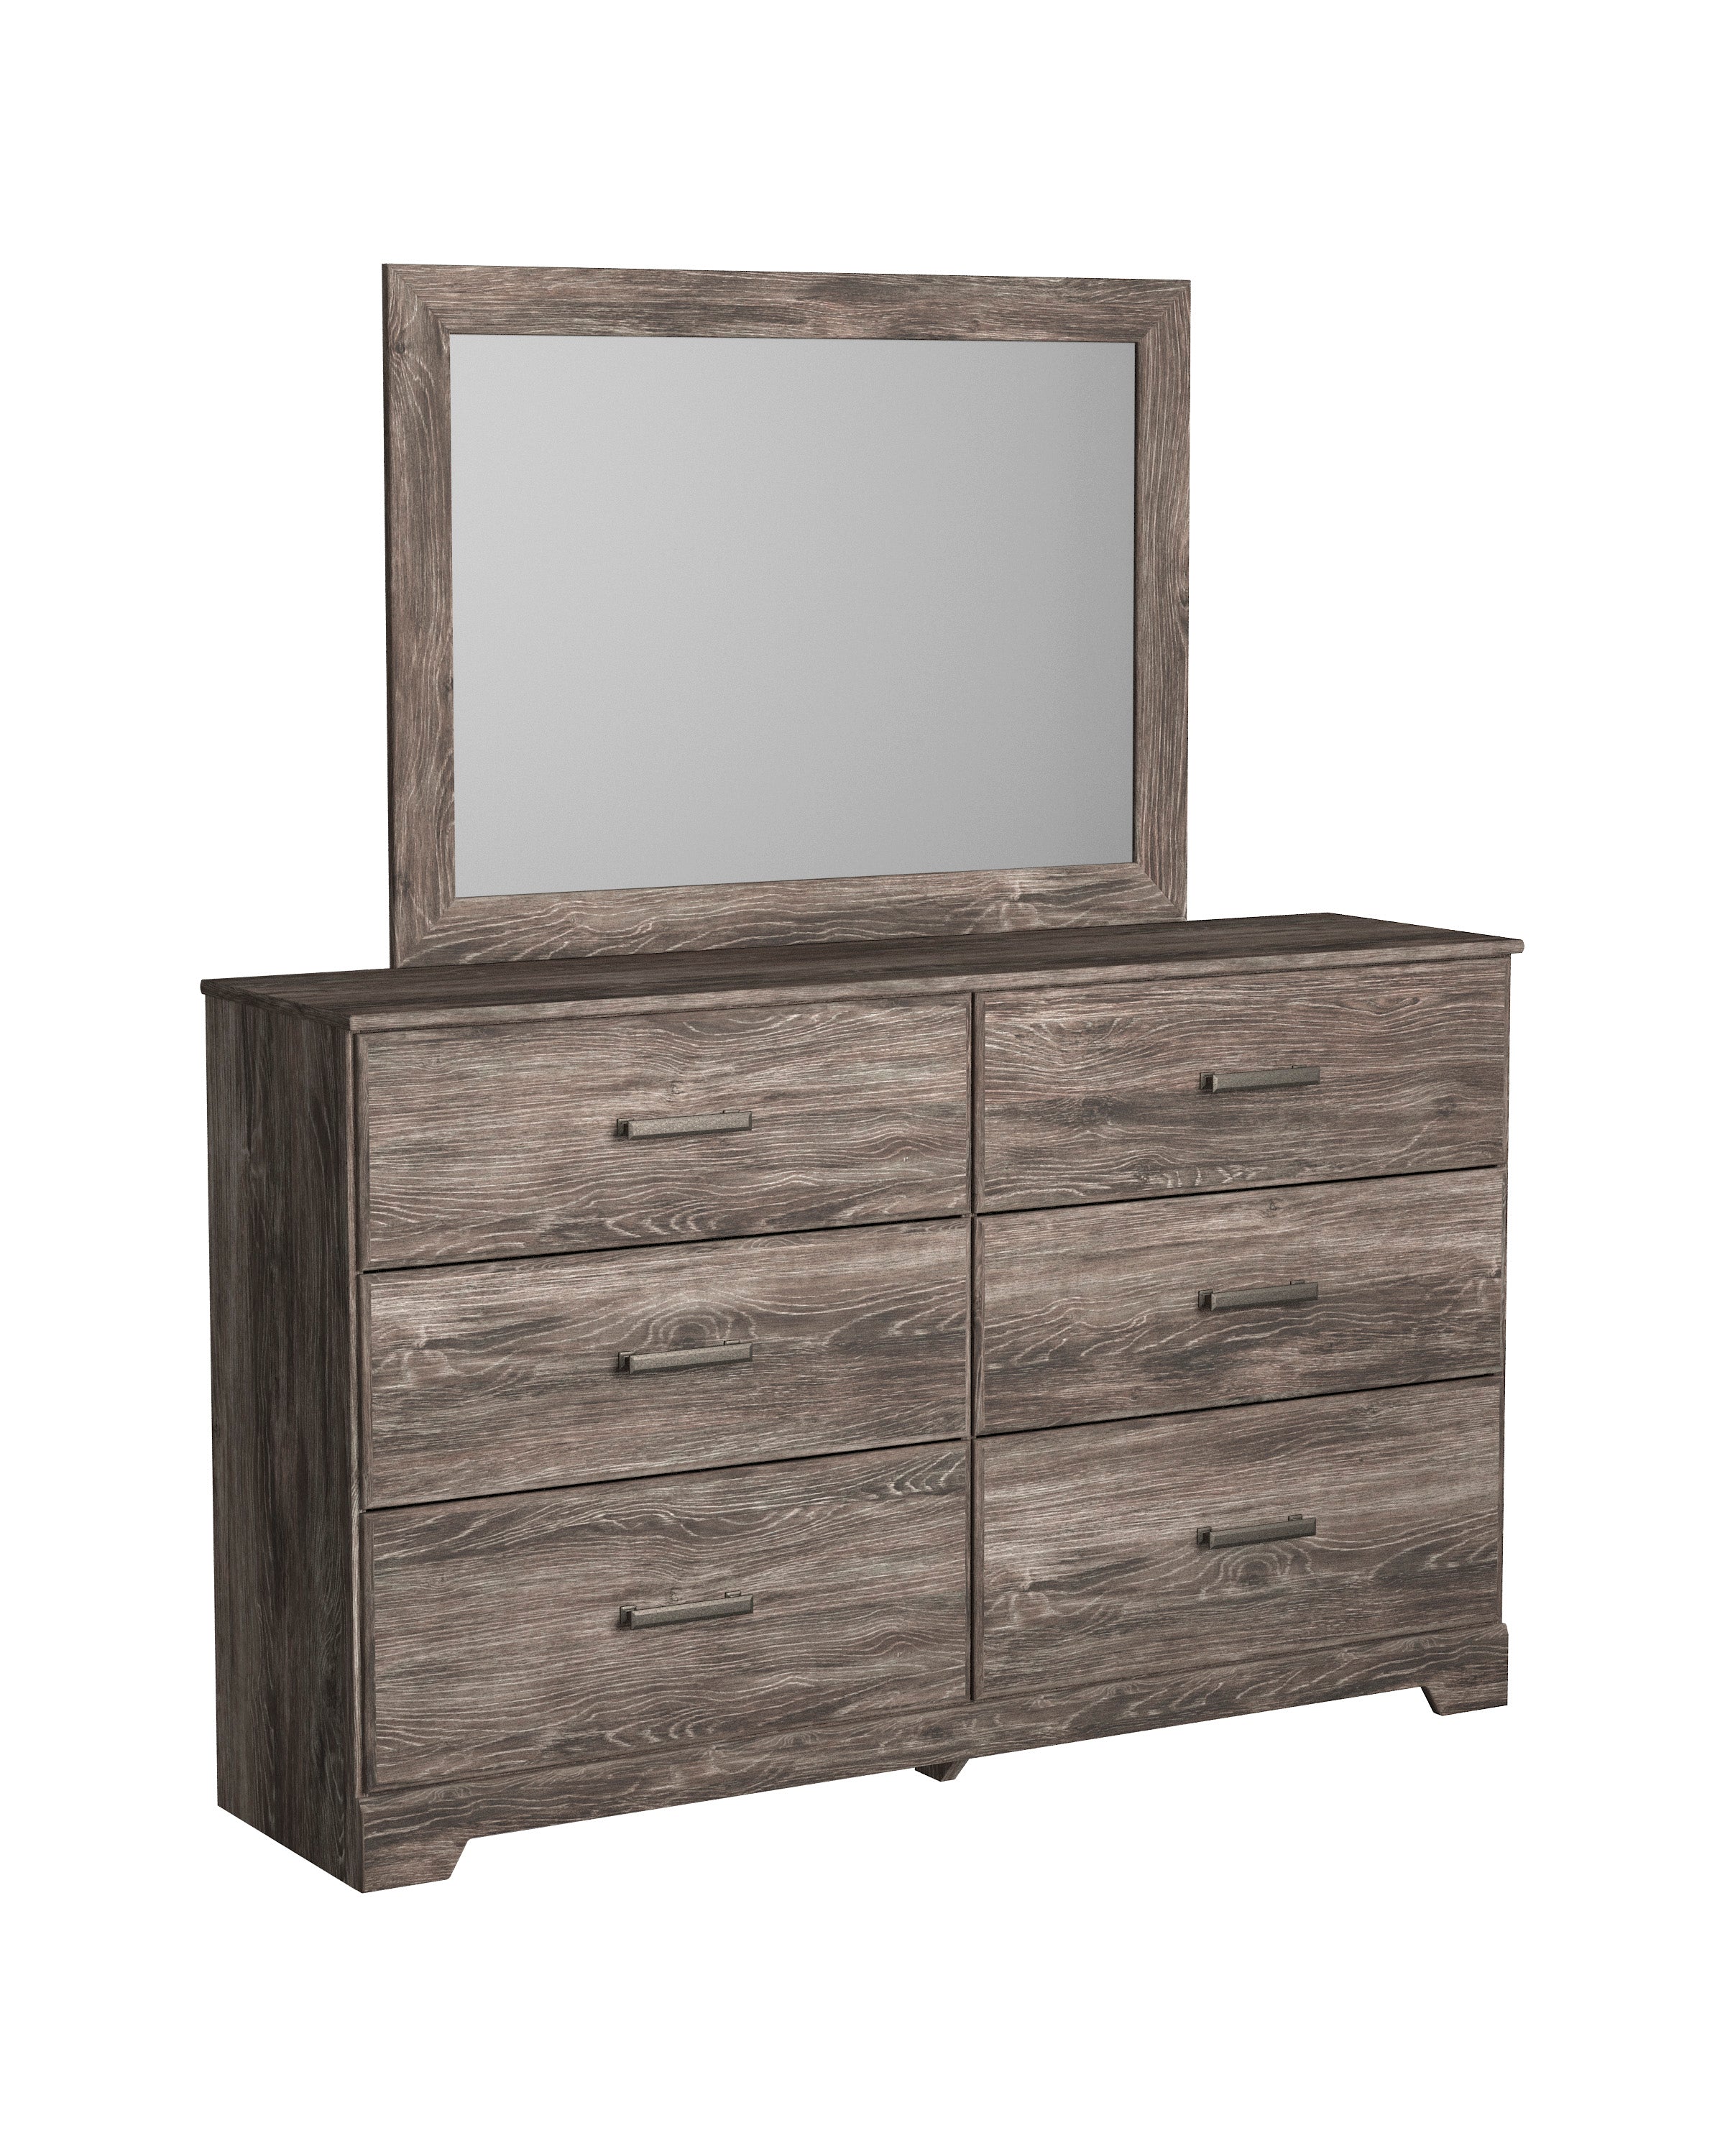 Ralinksi Twin Panel Bed with Mirrored Dresser